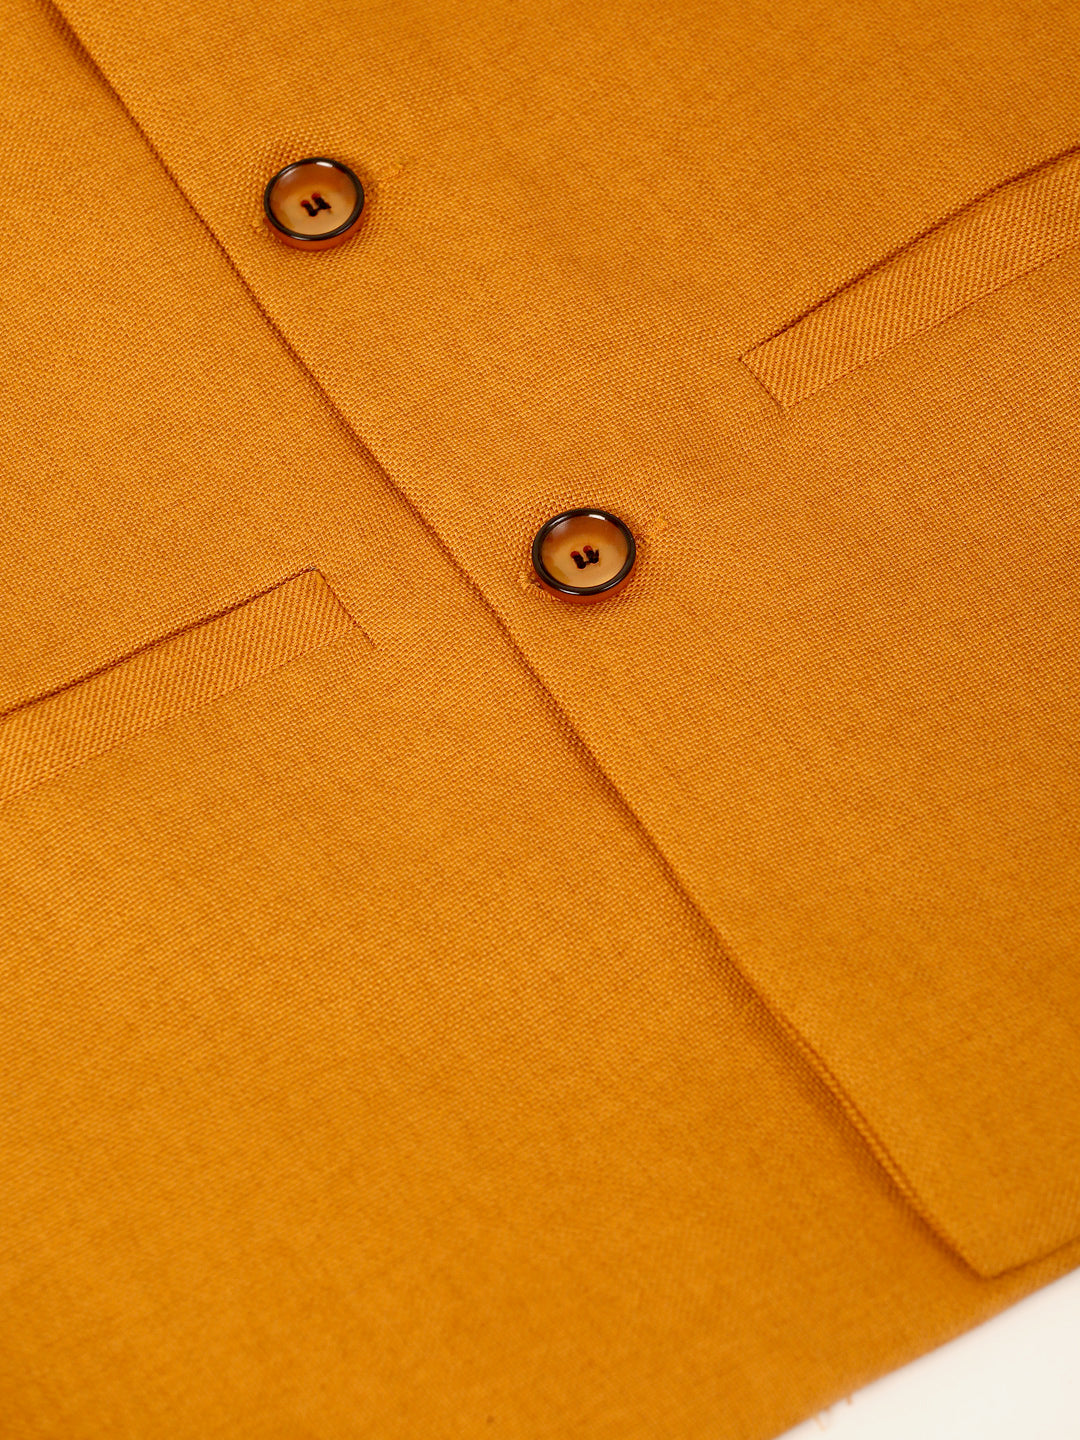 Men's Mustard Solid Woven Sleeveless Nehru Jackets ( Jowc 4046 Mustard ) - Virat Fashions